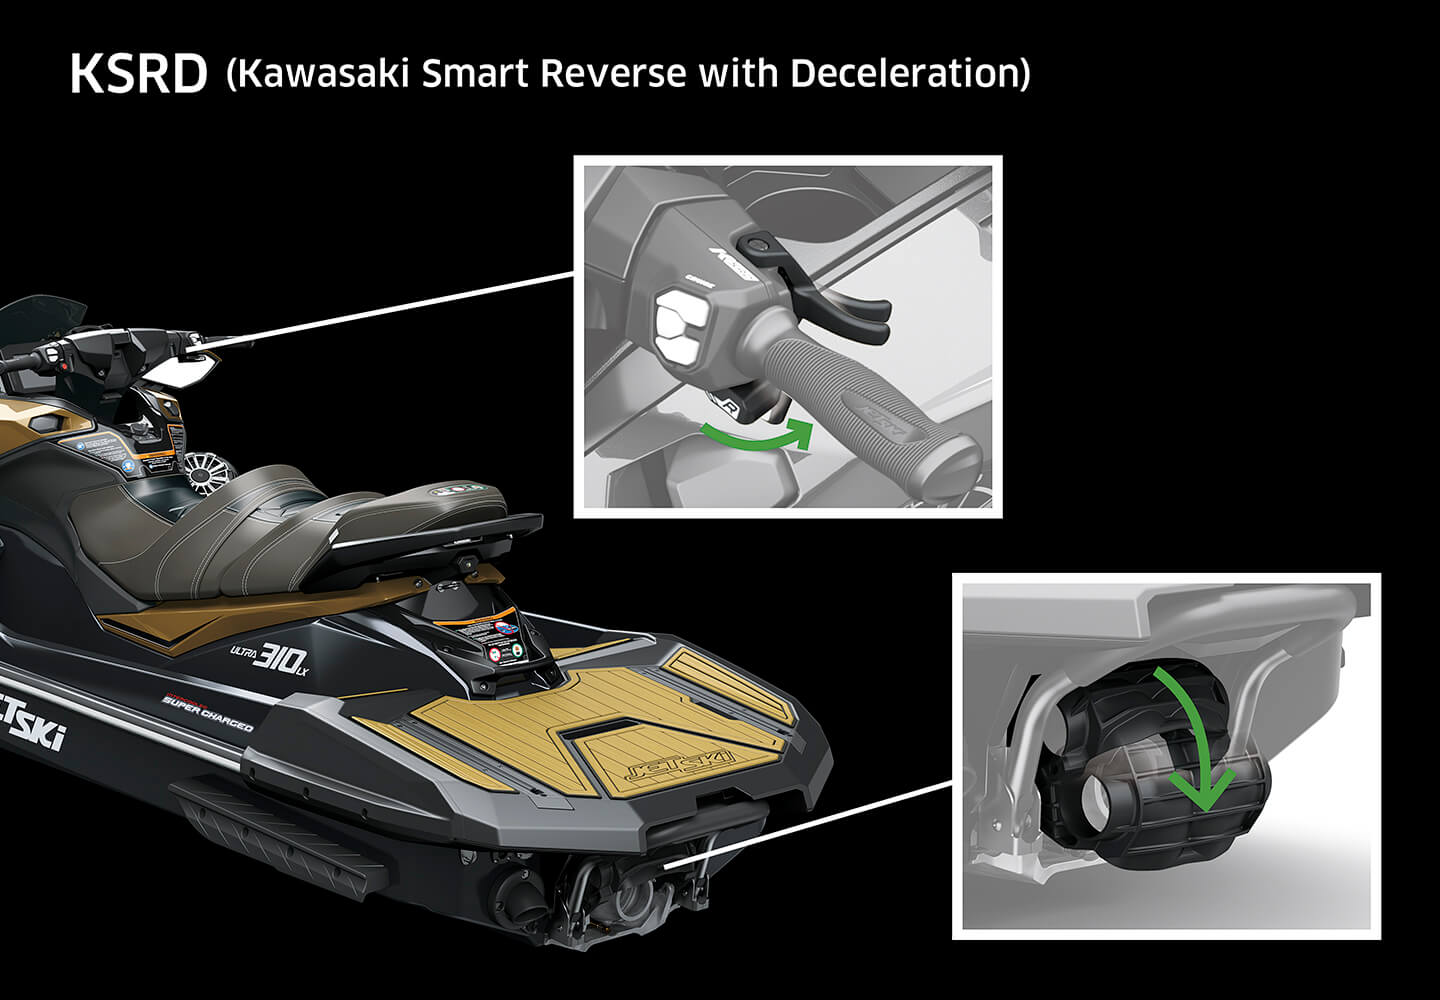 Kawasaki Jet Ski® Ultra® 310 | Powerful & Capable